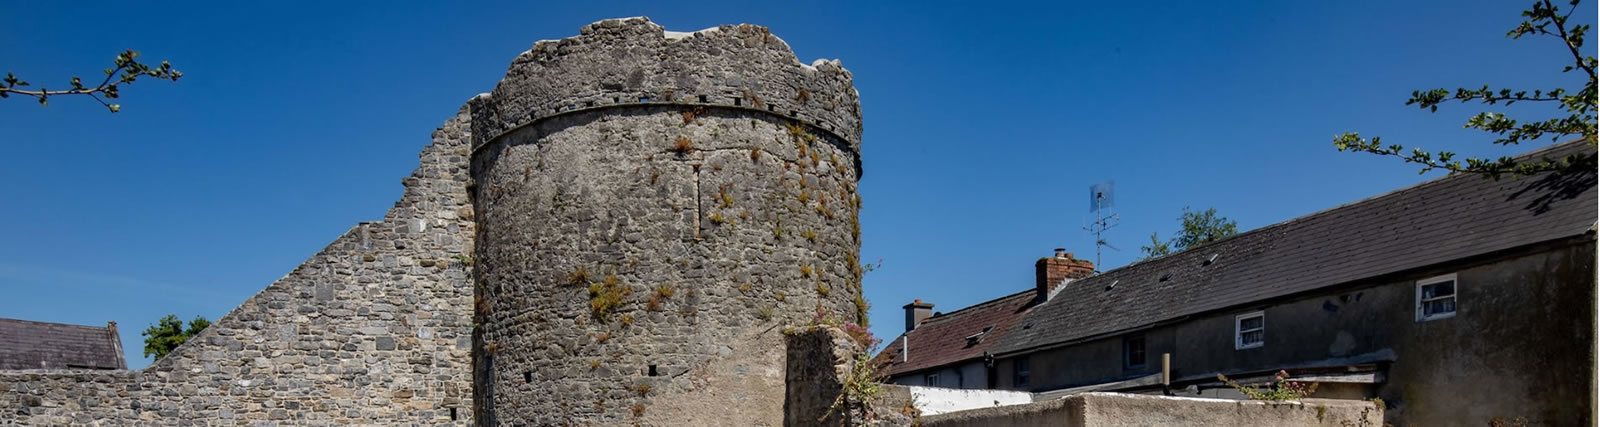 Talbots Tower Kilkenny Stadtmauer